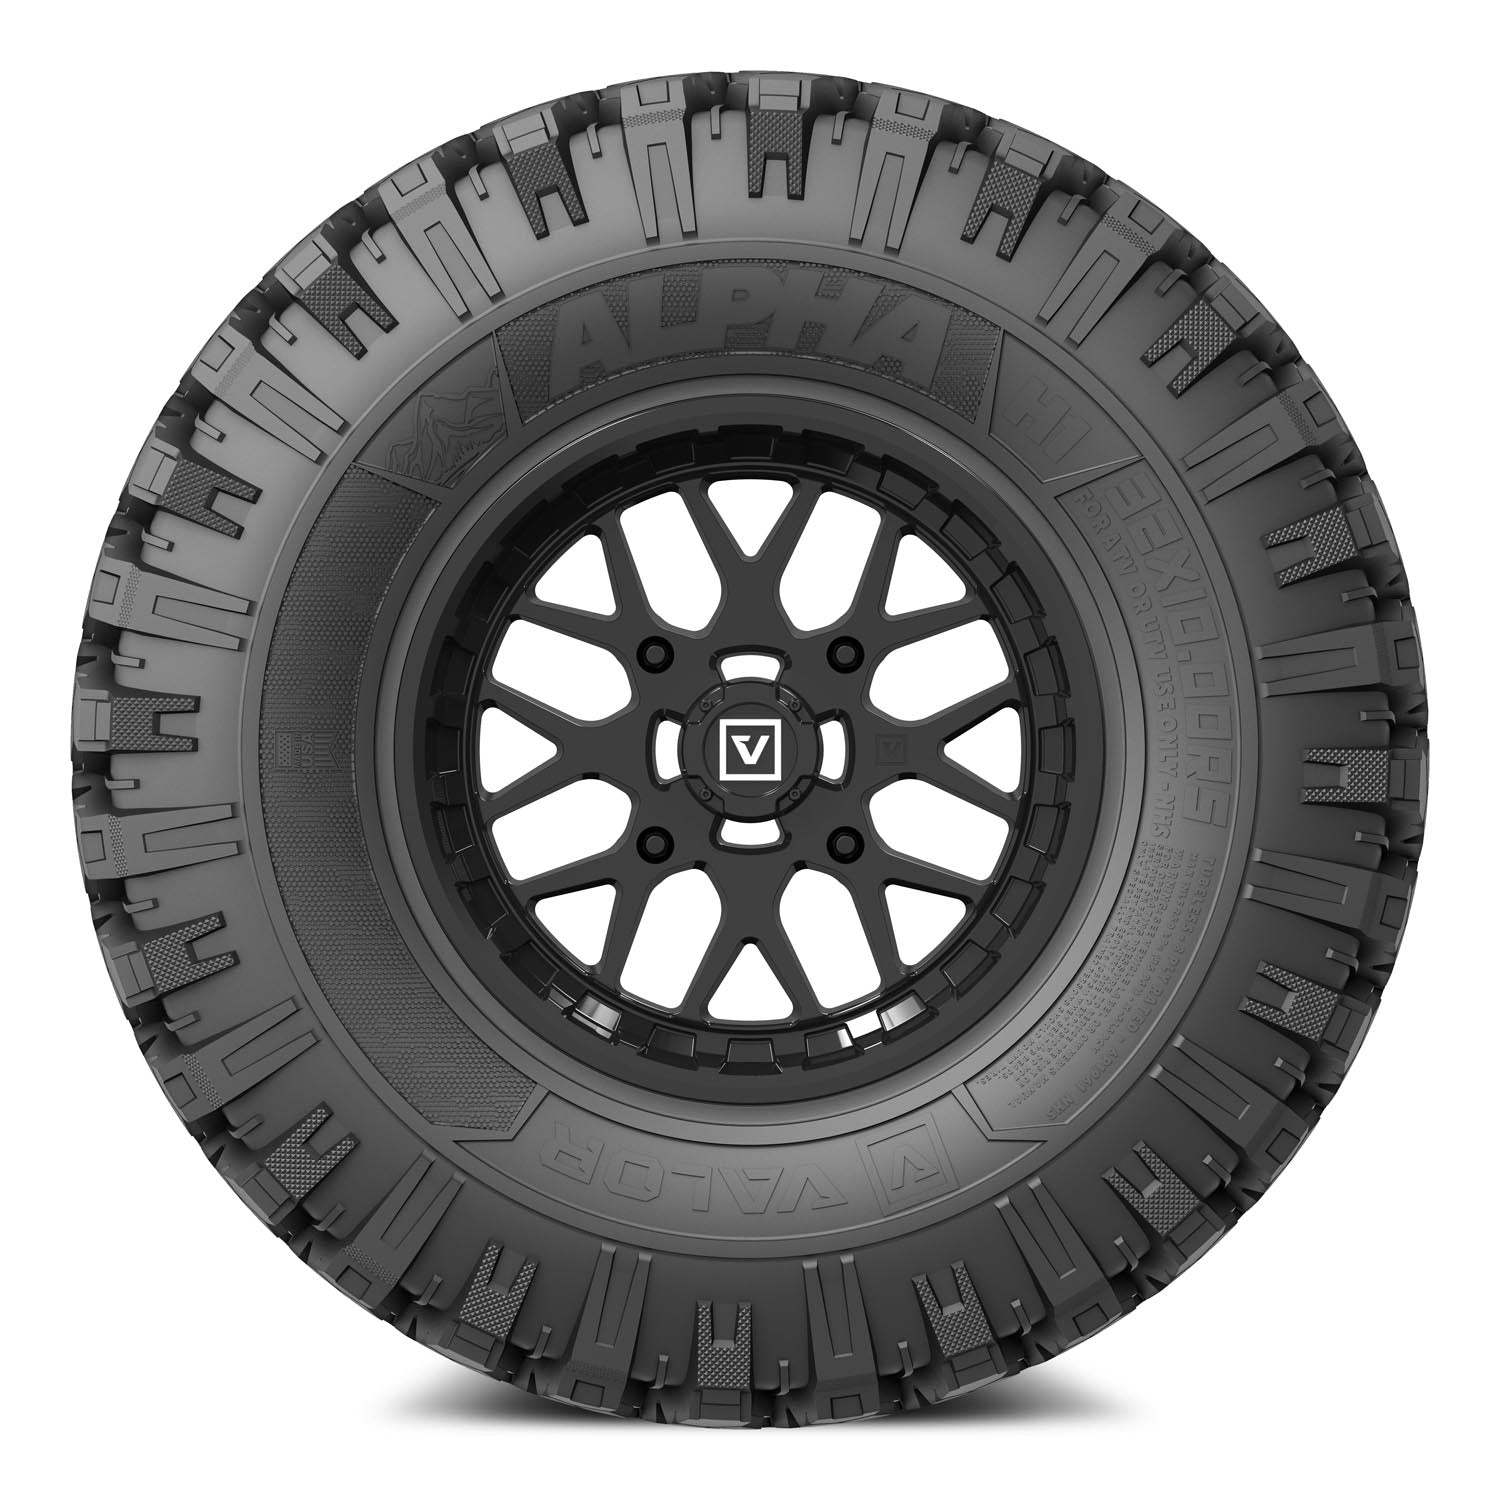 Valor Offroad UTV rims and wheels - V03 UTV Rims on Alpha UTV Tire